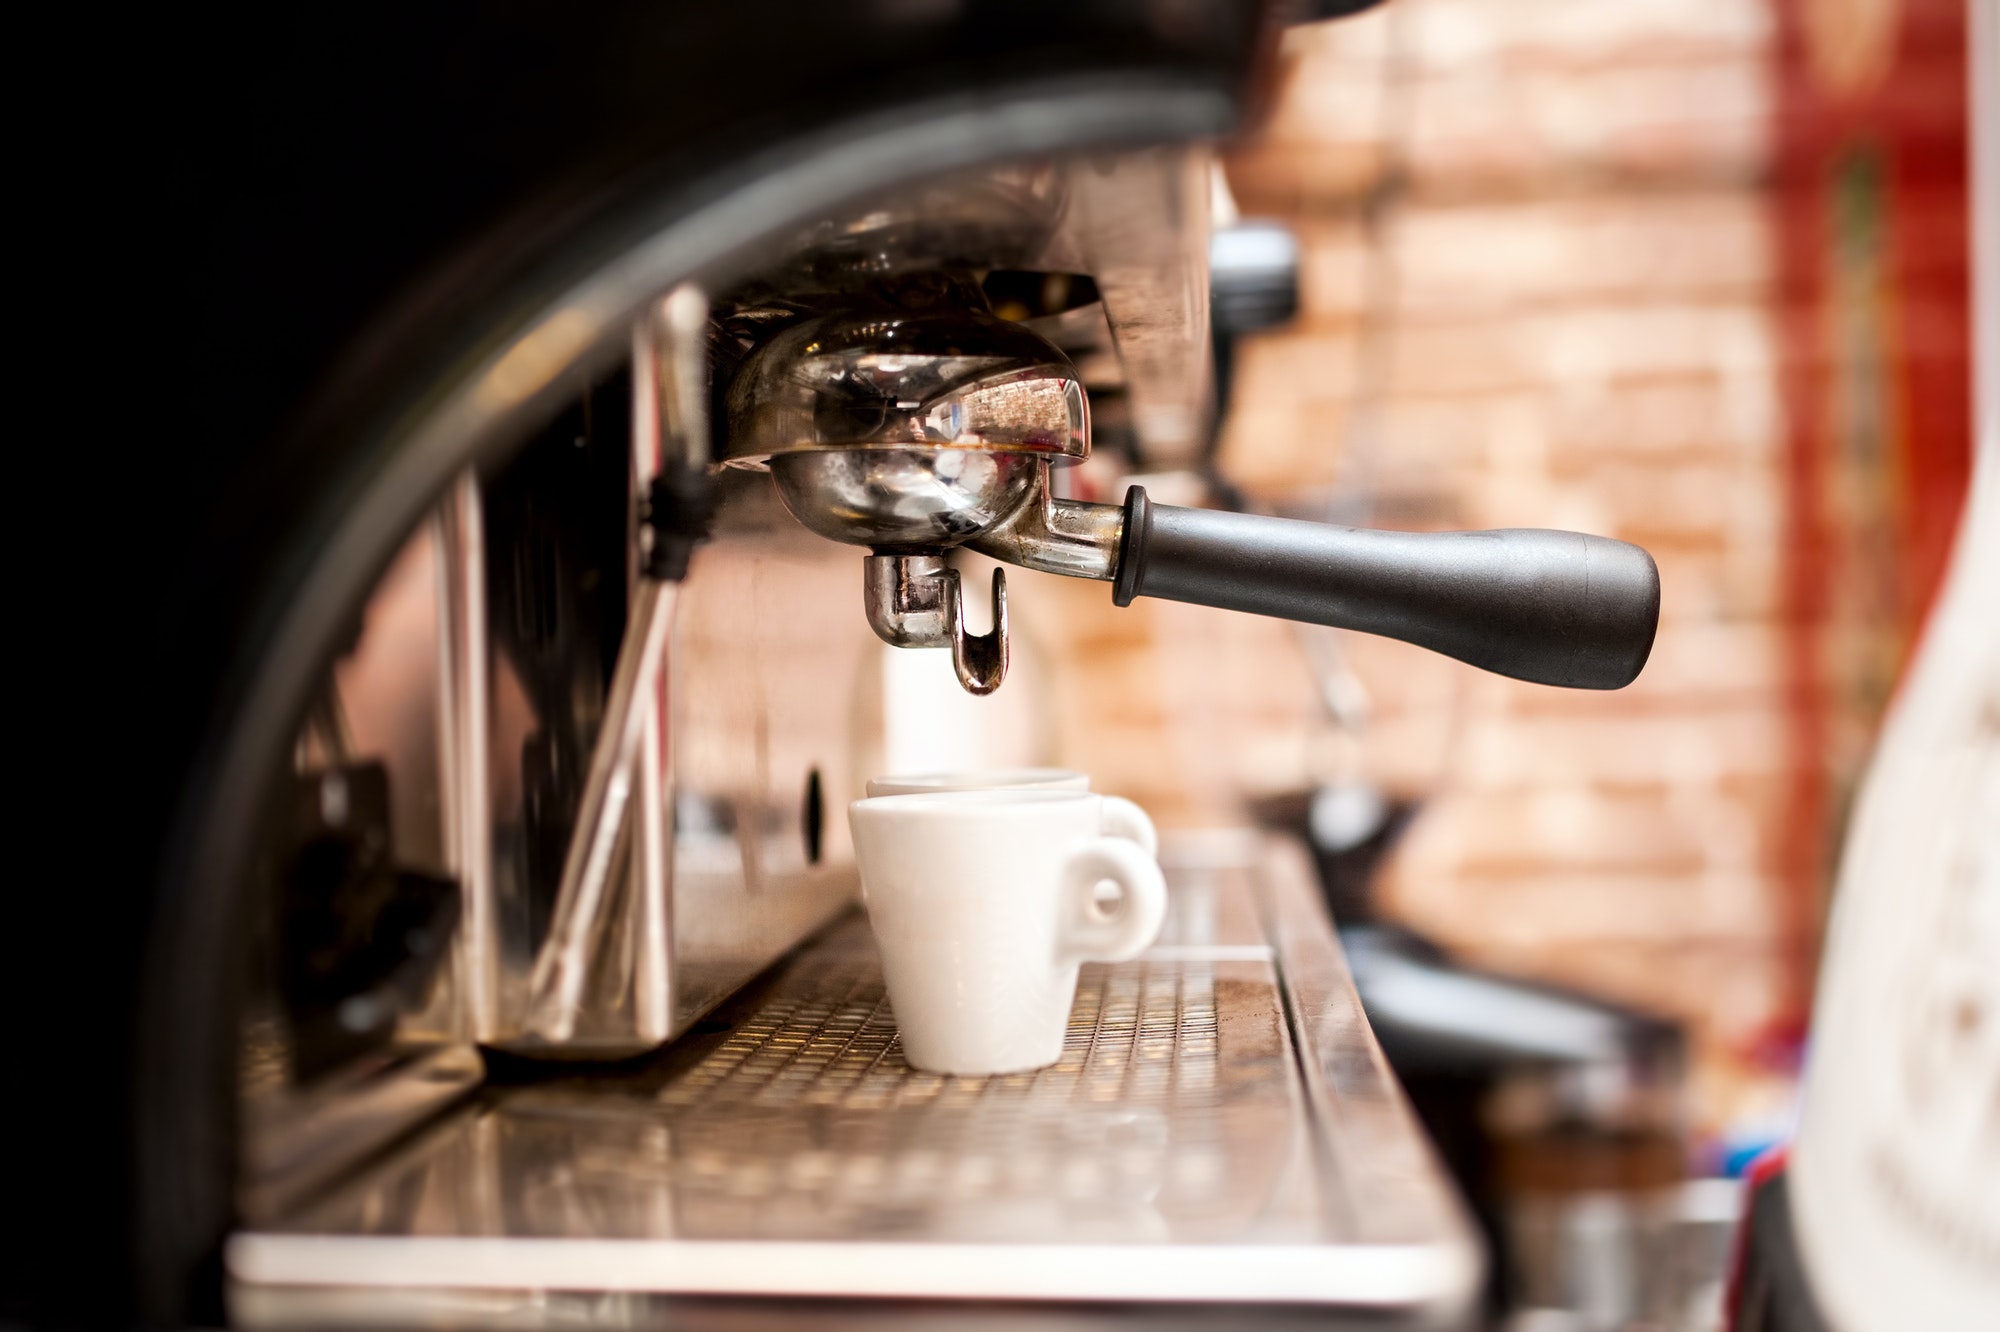 machine preparing espresso in coffee shop or bar